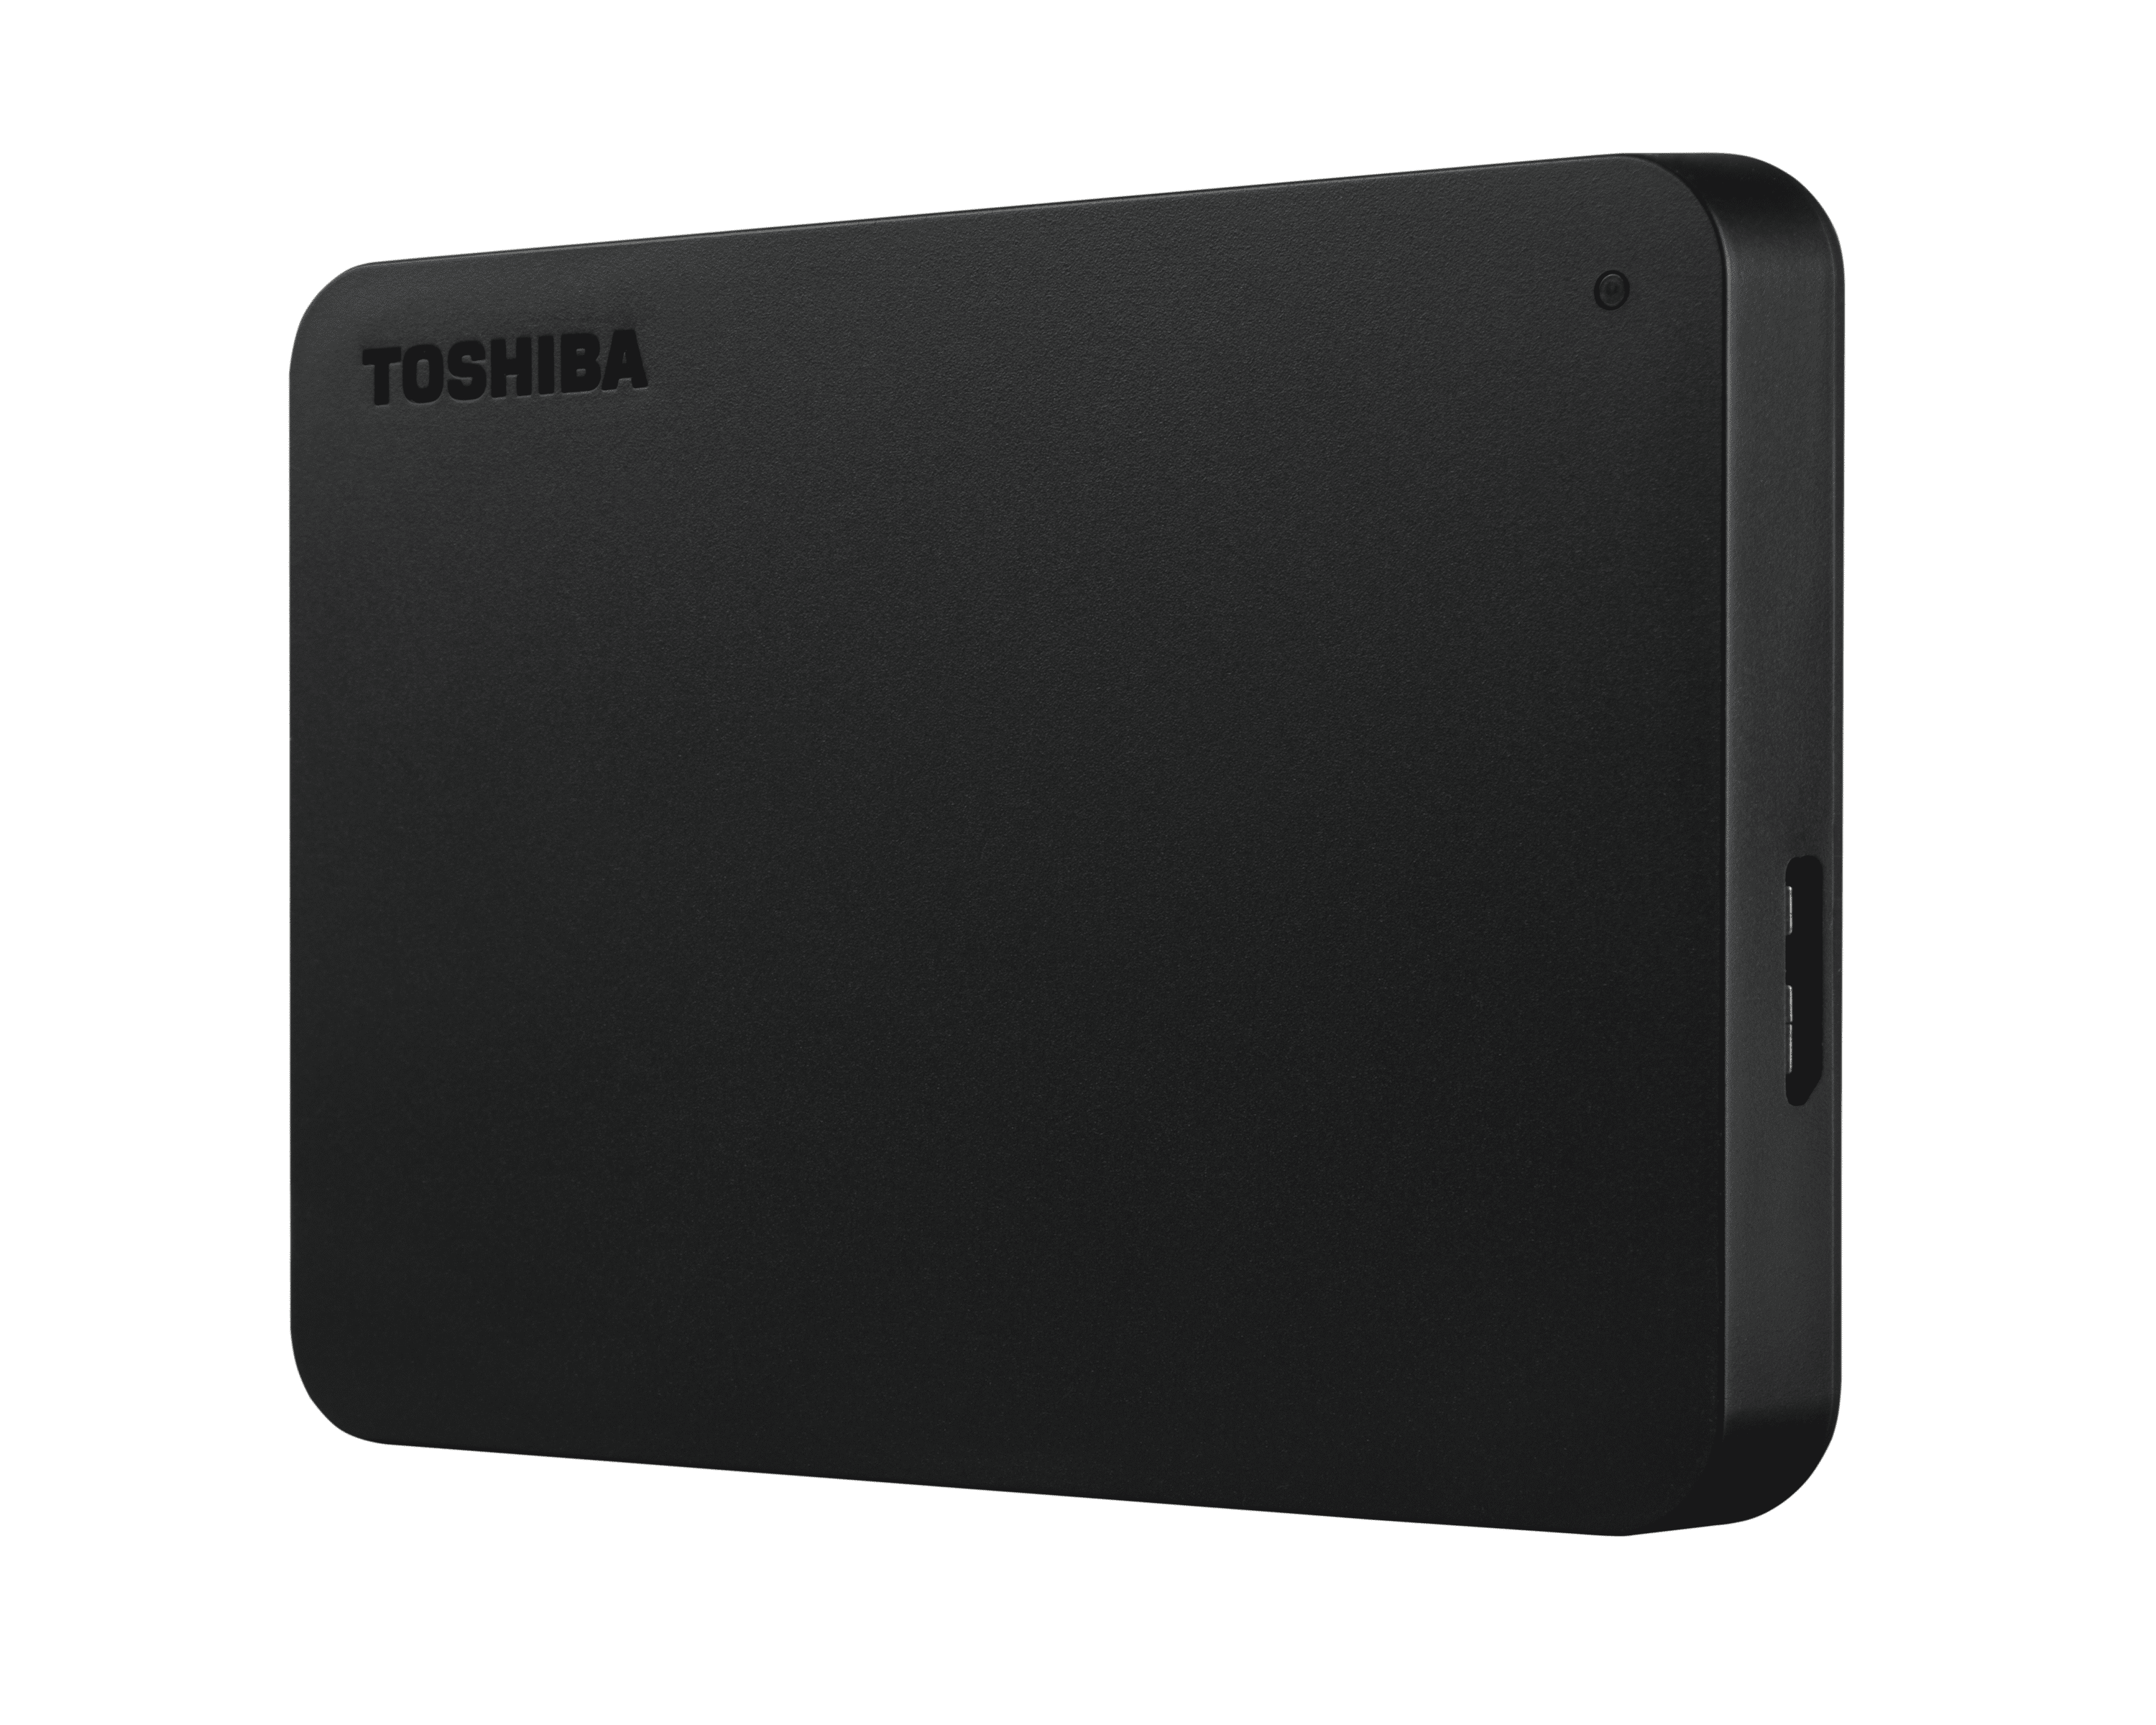 Toshiba 1TB Portable External Hard Drive USB 3.0 Video Music Storage 1 Terabyte 